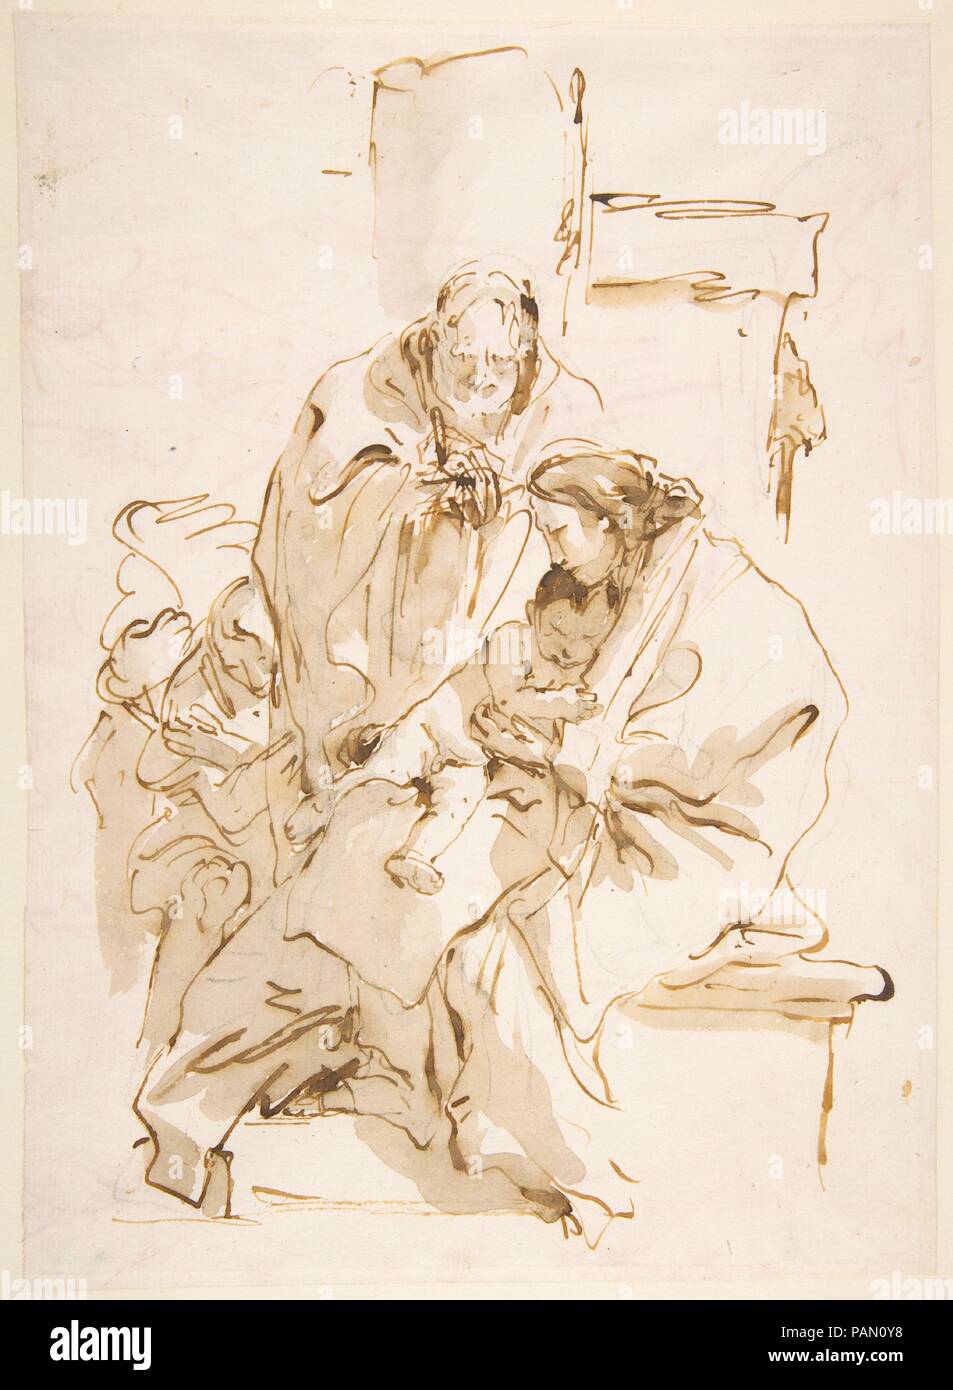 The Holy Family. Artist: Giovanni Battista Tiepolo (Italian, Venice 1696-1770 Madrid). Dimensions: 10-1/2 x 7-5/8 in.  (26.6 x 19.3 cm). Date: 1750-57. Museum: Metropolitan Museum of Art, New York, USA. Stock Photo